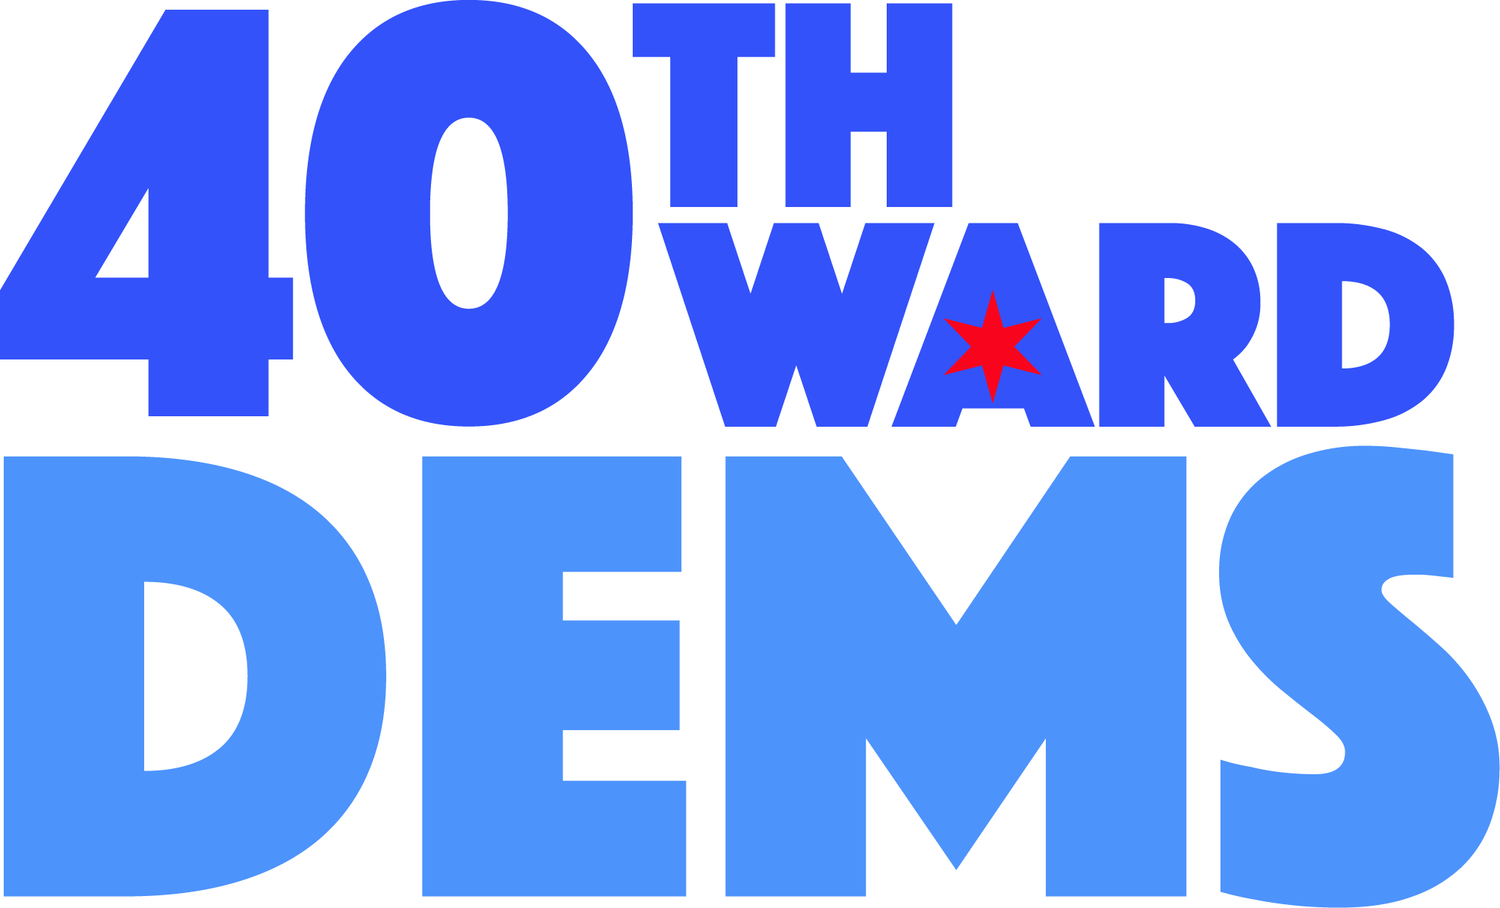 40th Ward Democrats